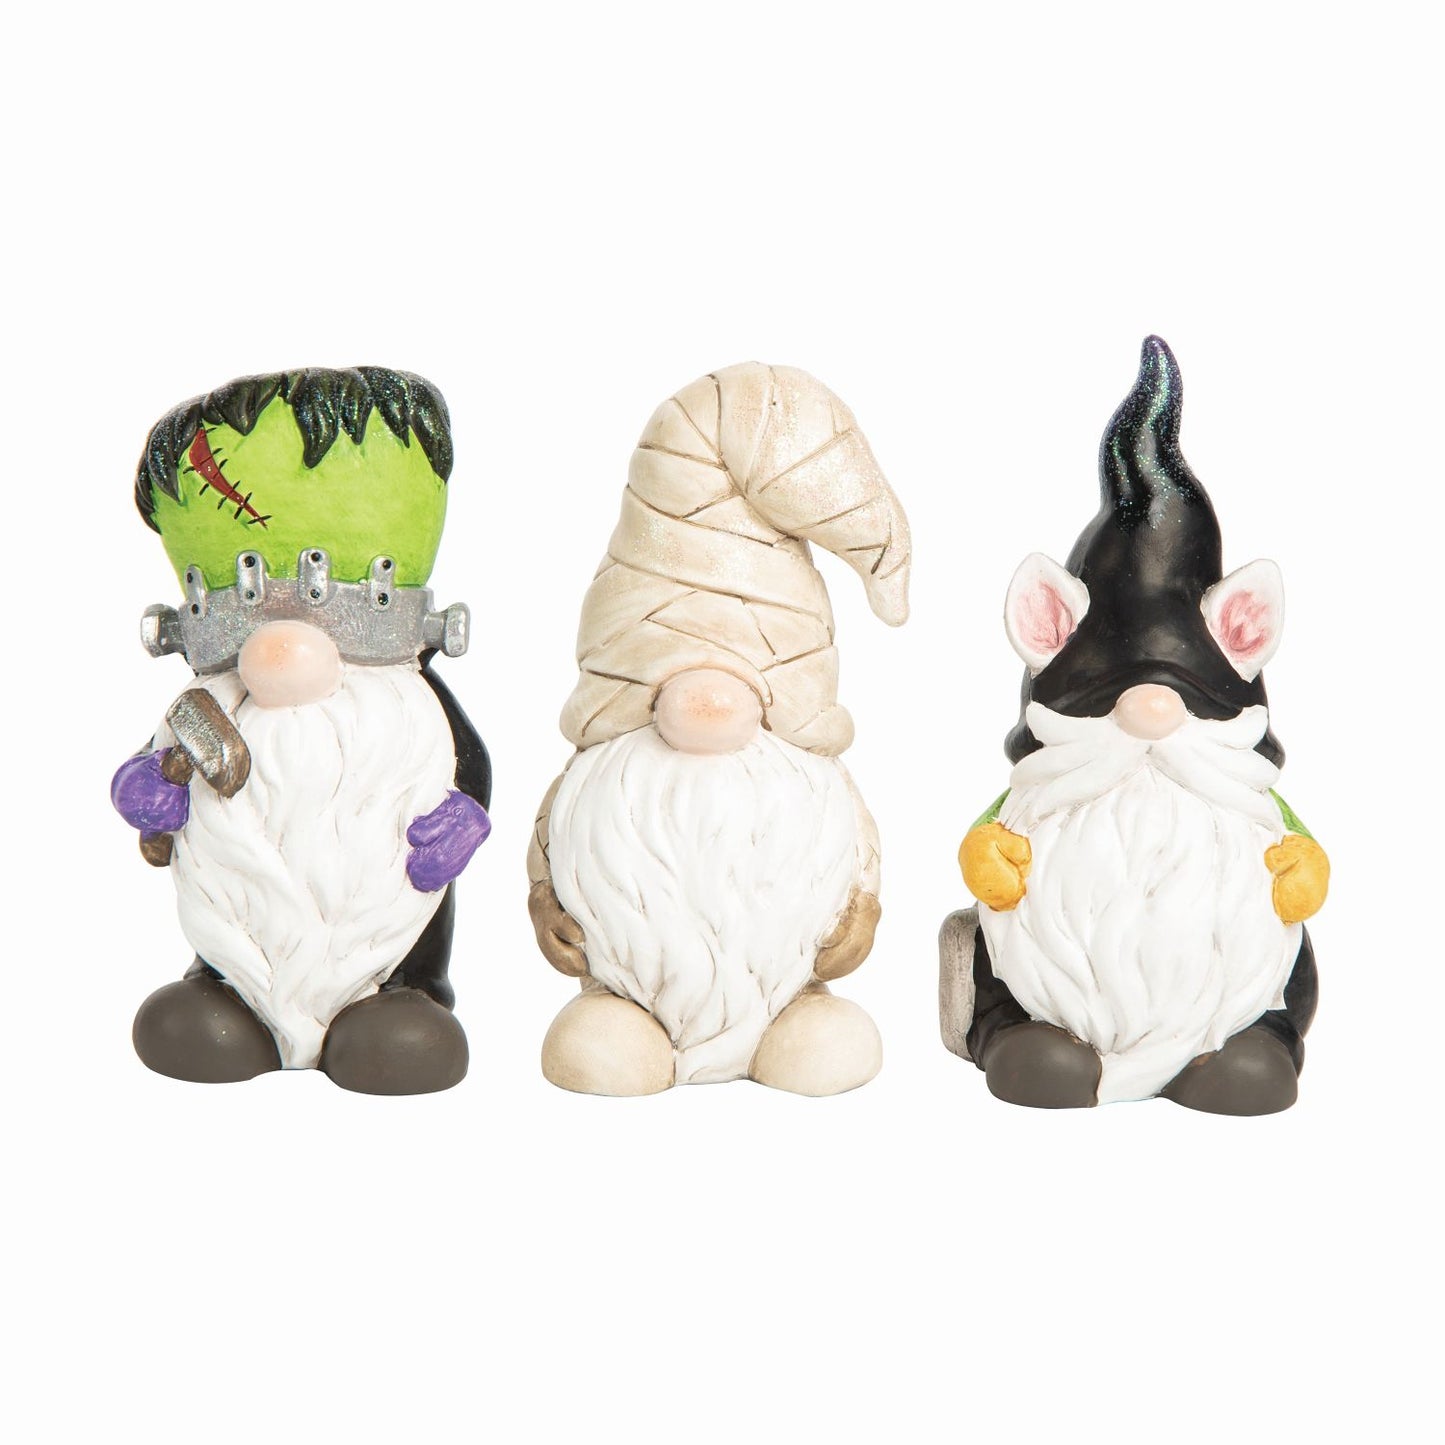 Transpac Terra Cotta Costume Gnome Figurine, Set Of 3, Assortment